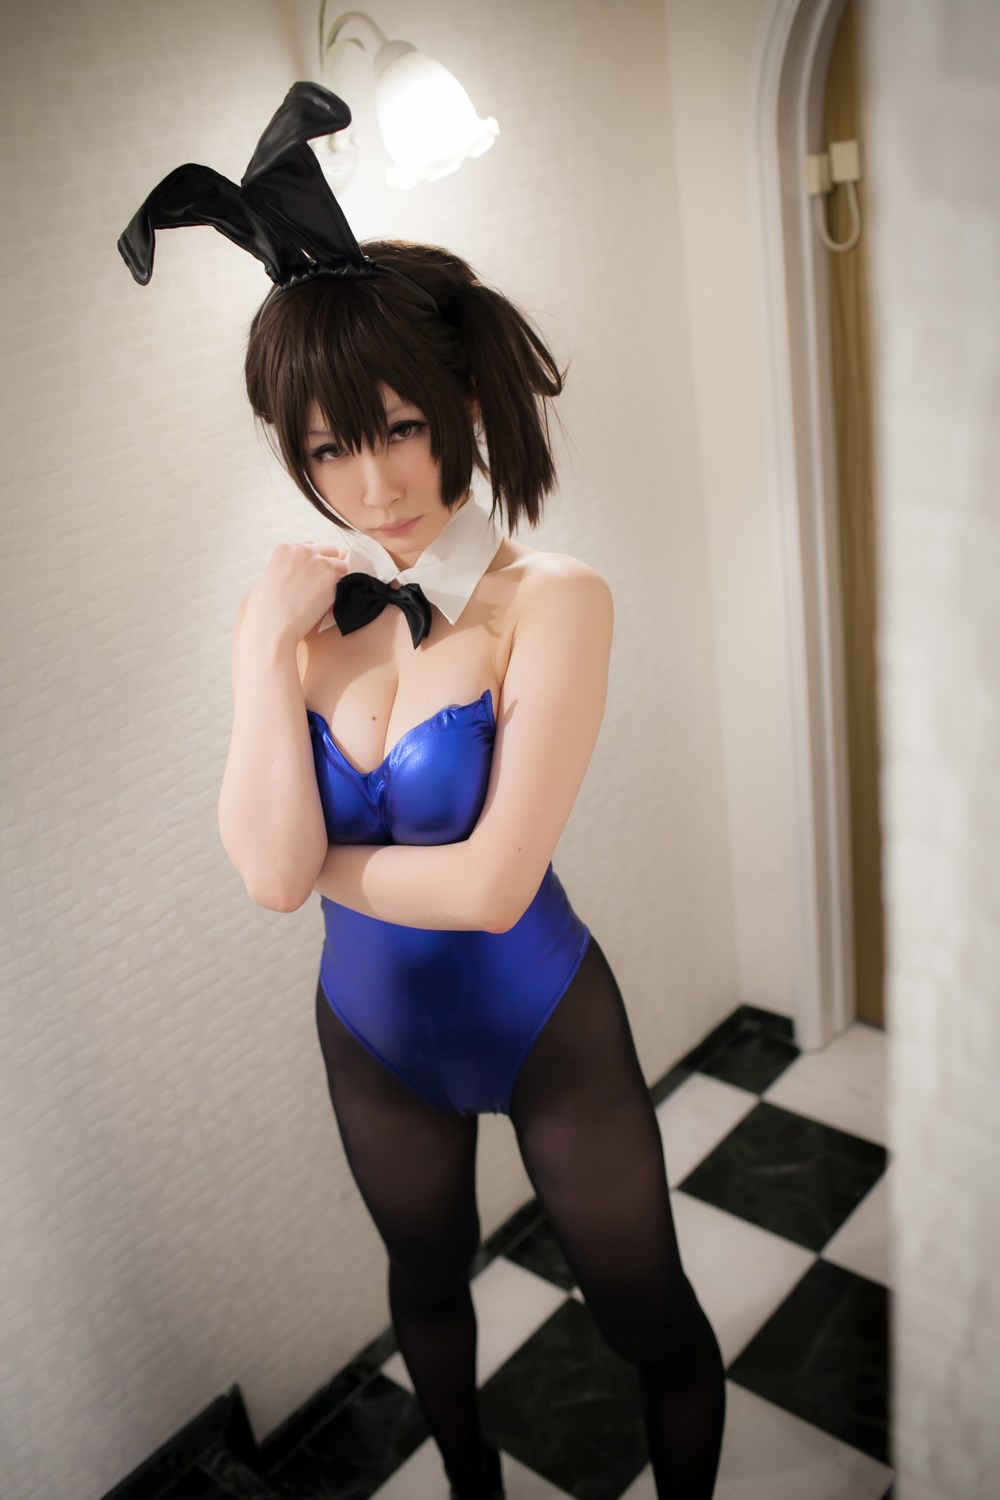 Rabbit suit Kaga animation reality show sexy stockings girl(15)